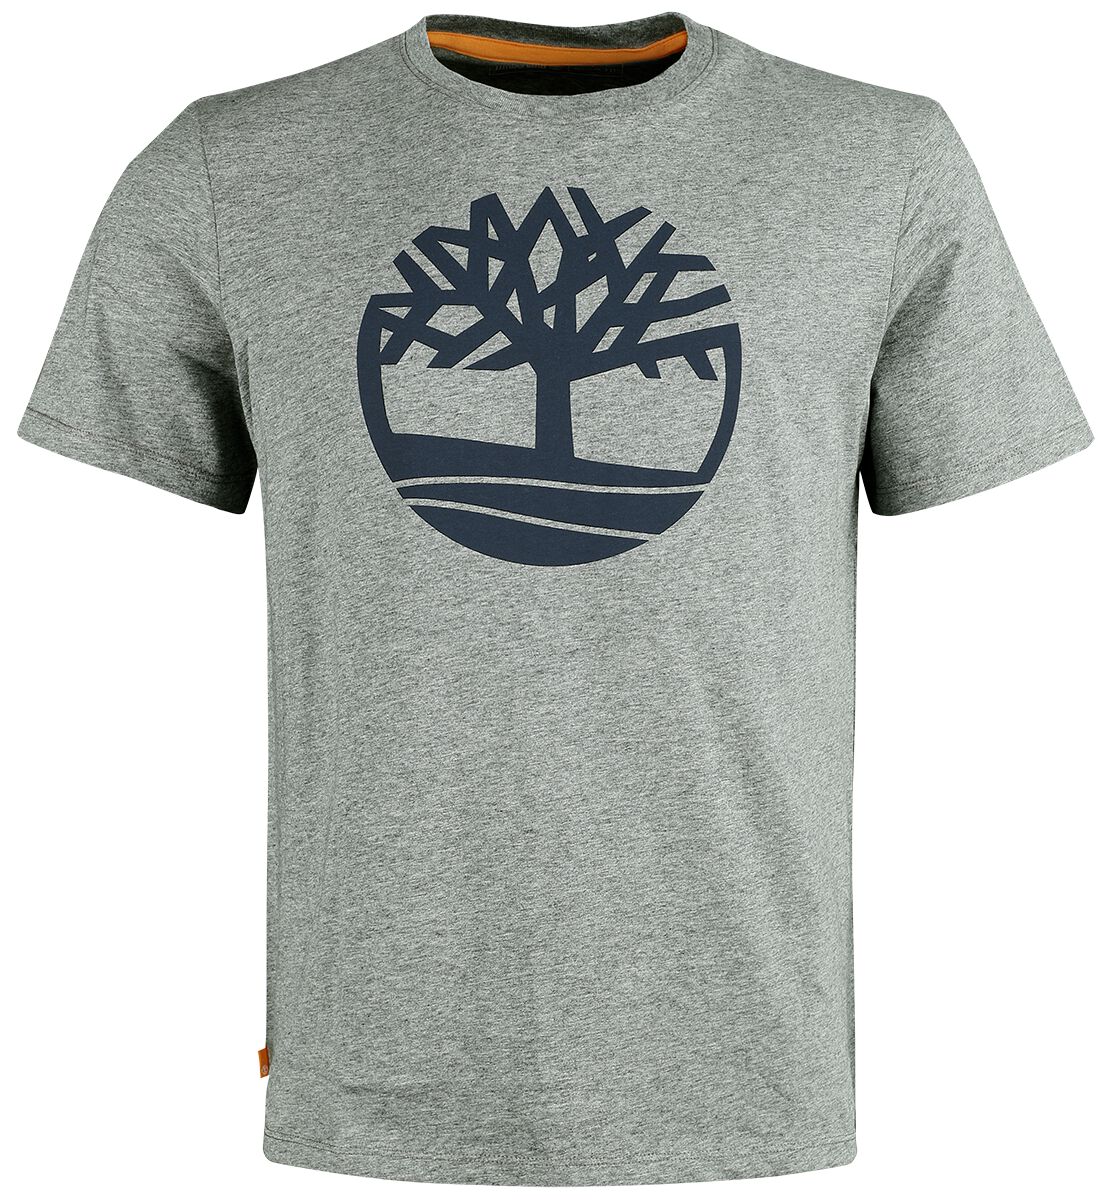 Timberland Kennebec River Tree Logo Short Sleeve Tee T-Shirt grau meliert in L